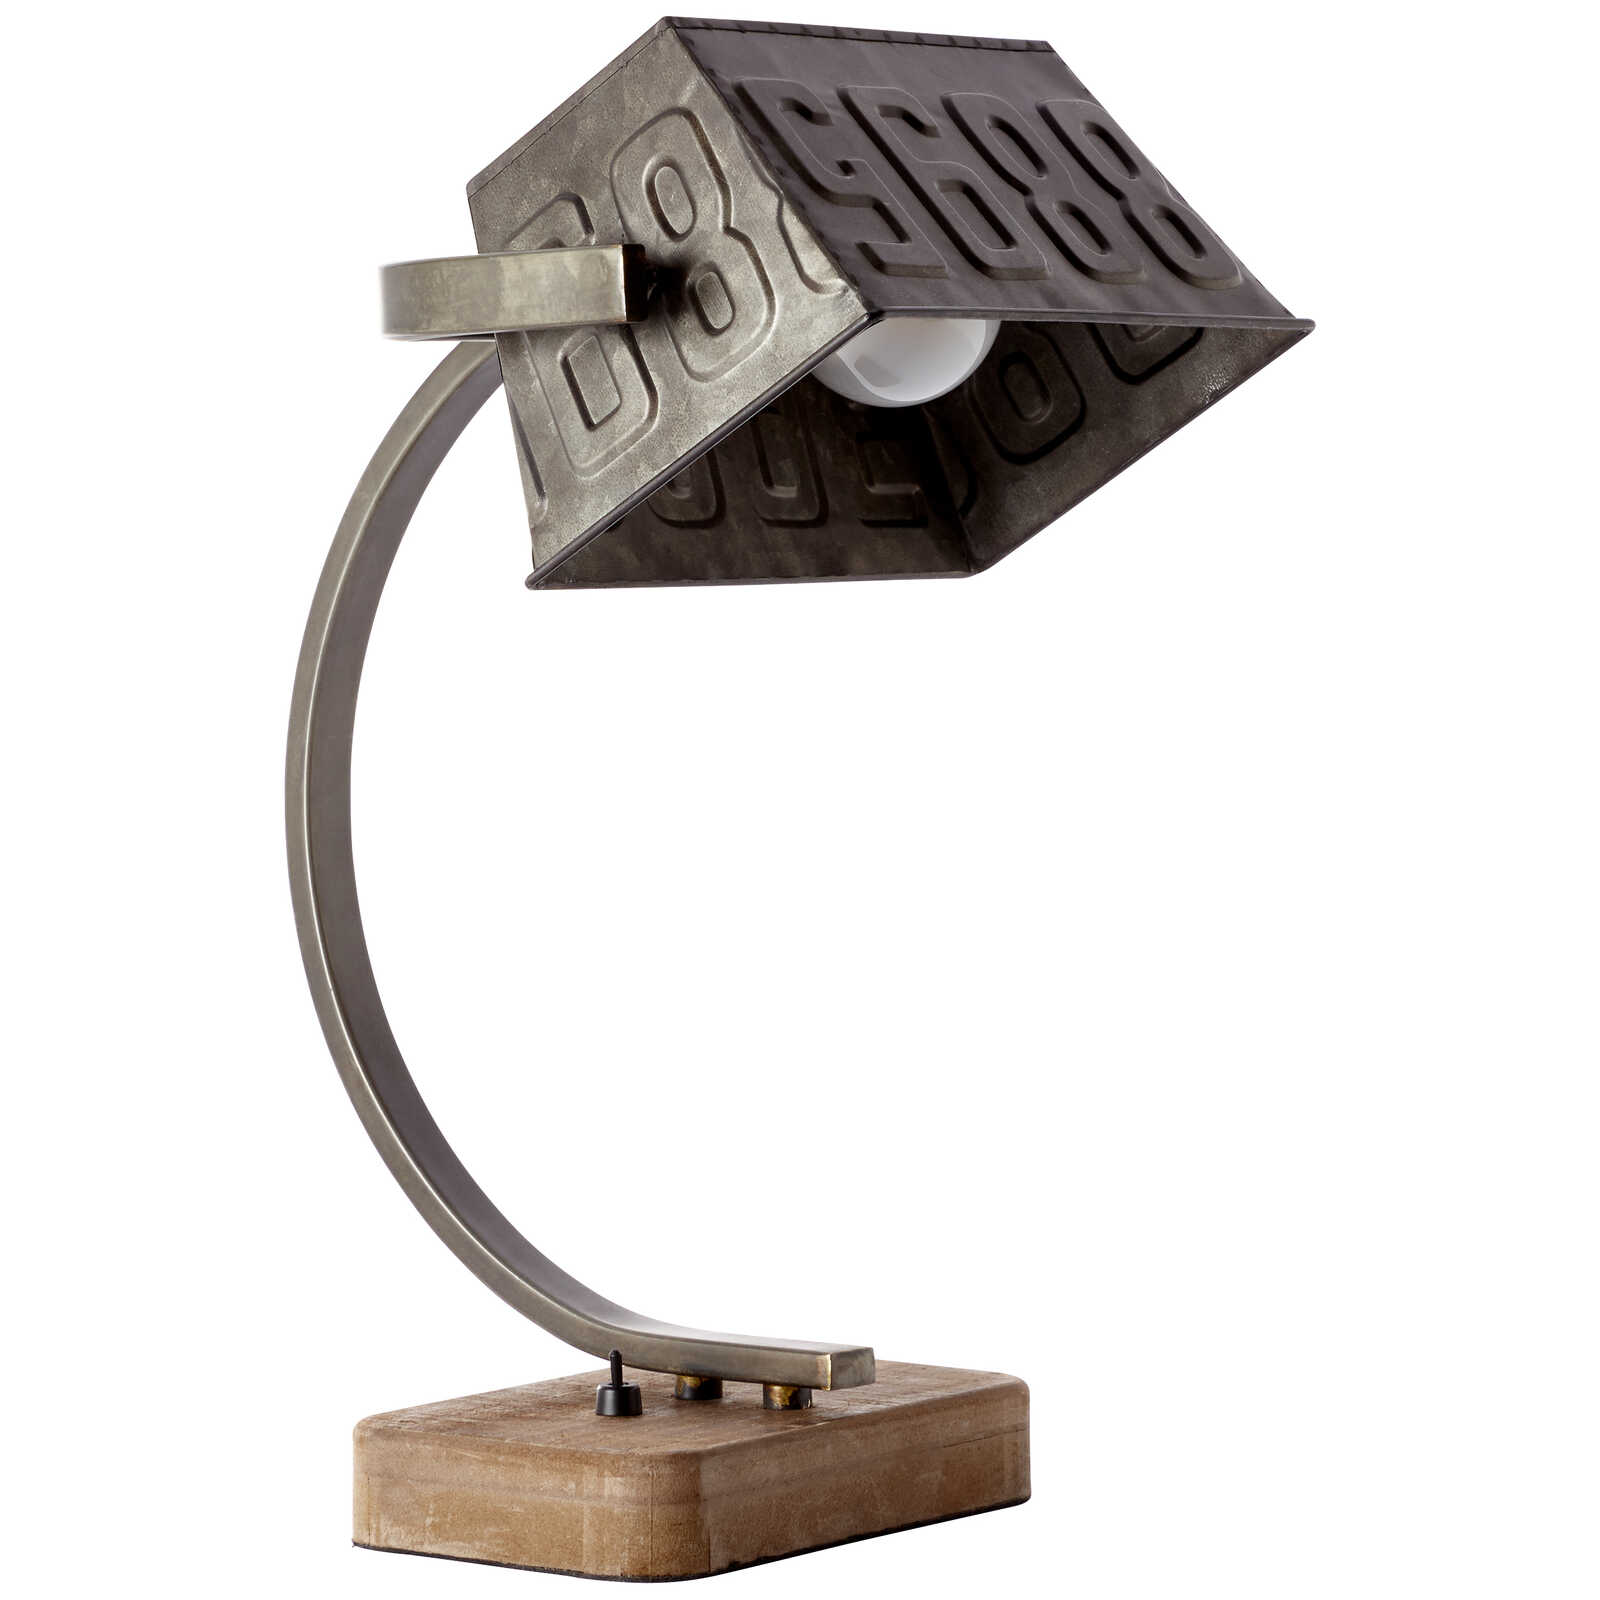             Wooden table lamp - Ferdinand - Brown
        